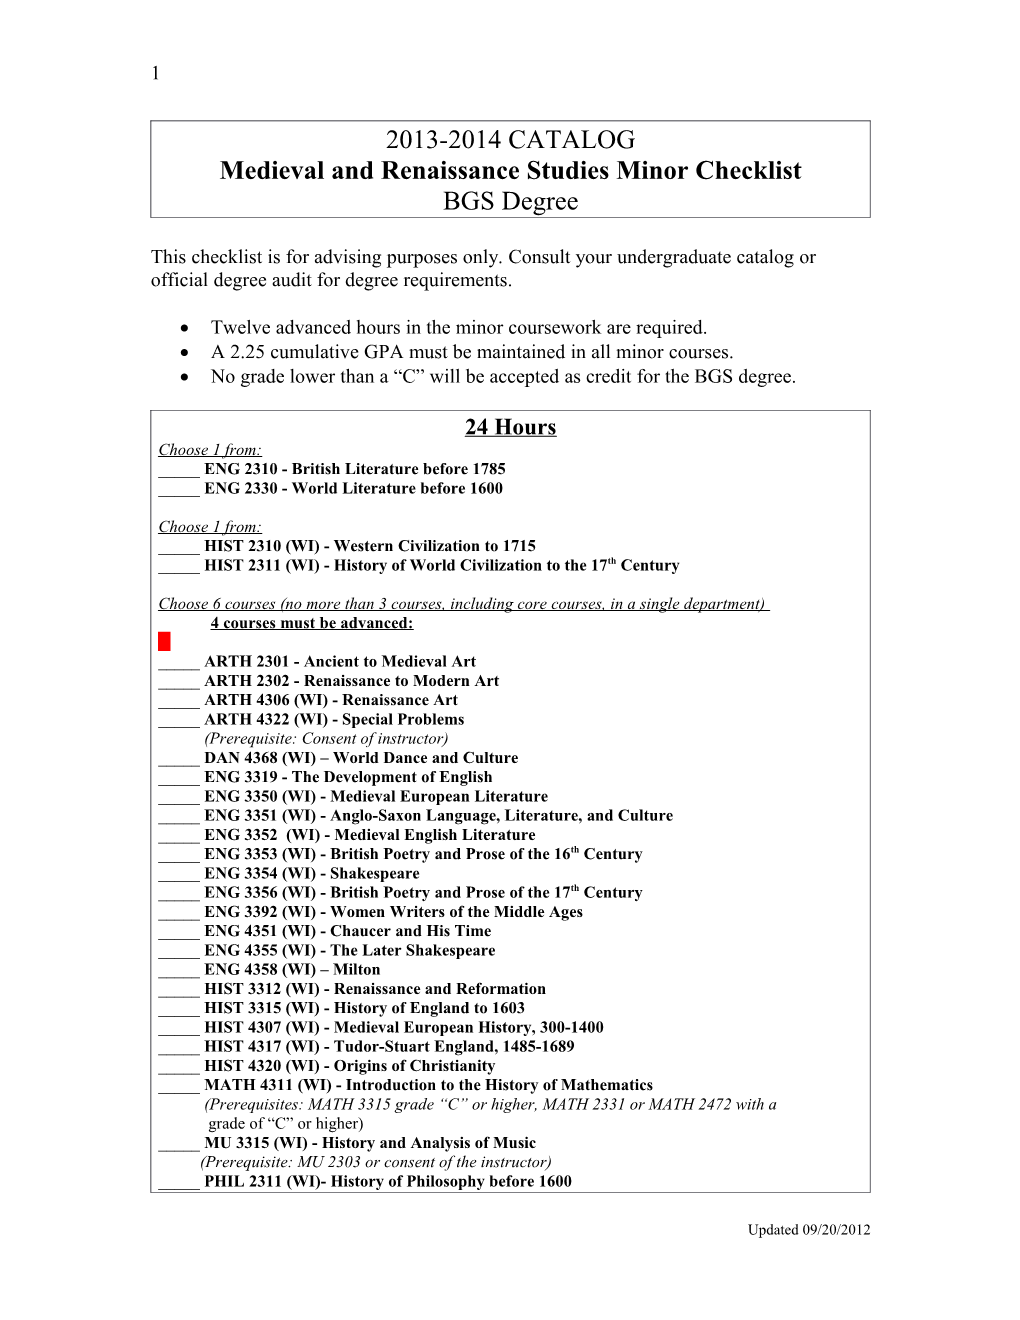 Medieval and Renaissance Studies Minor Checklist